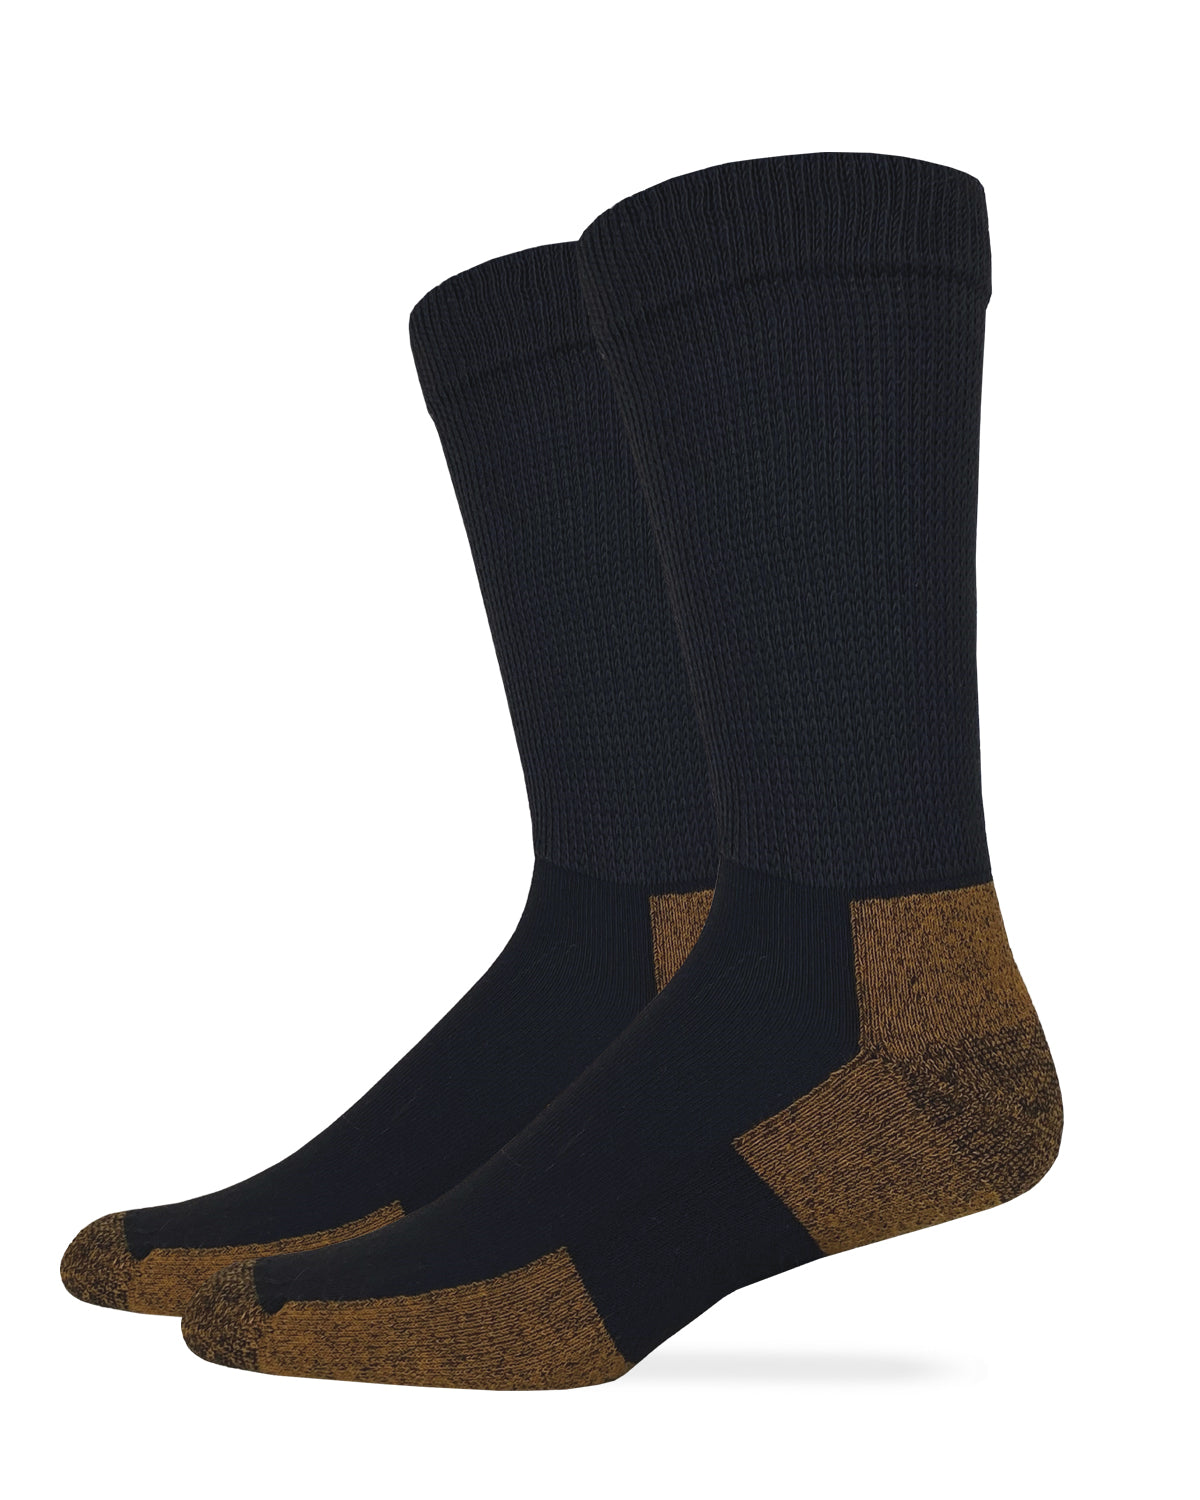 Carolina Ultimate Men's Non-Binding Cupron Copper Socks 2 Pair Pack